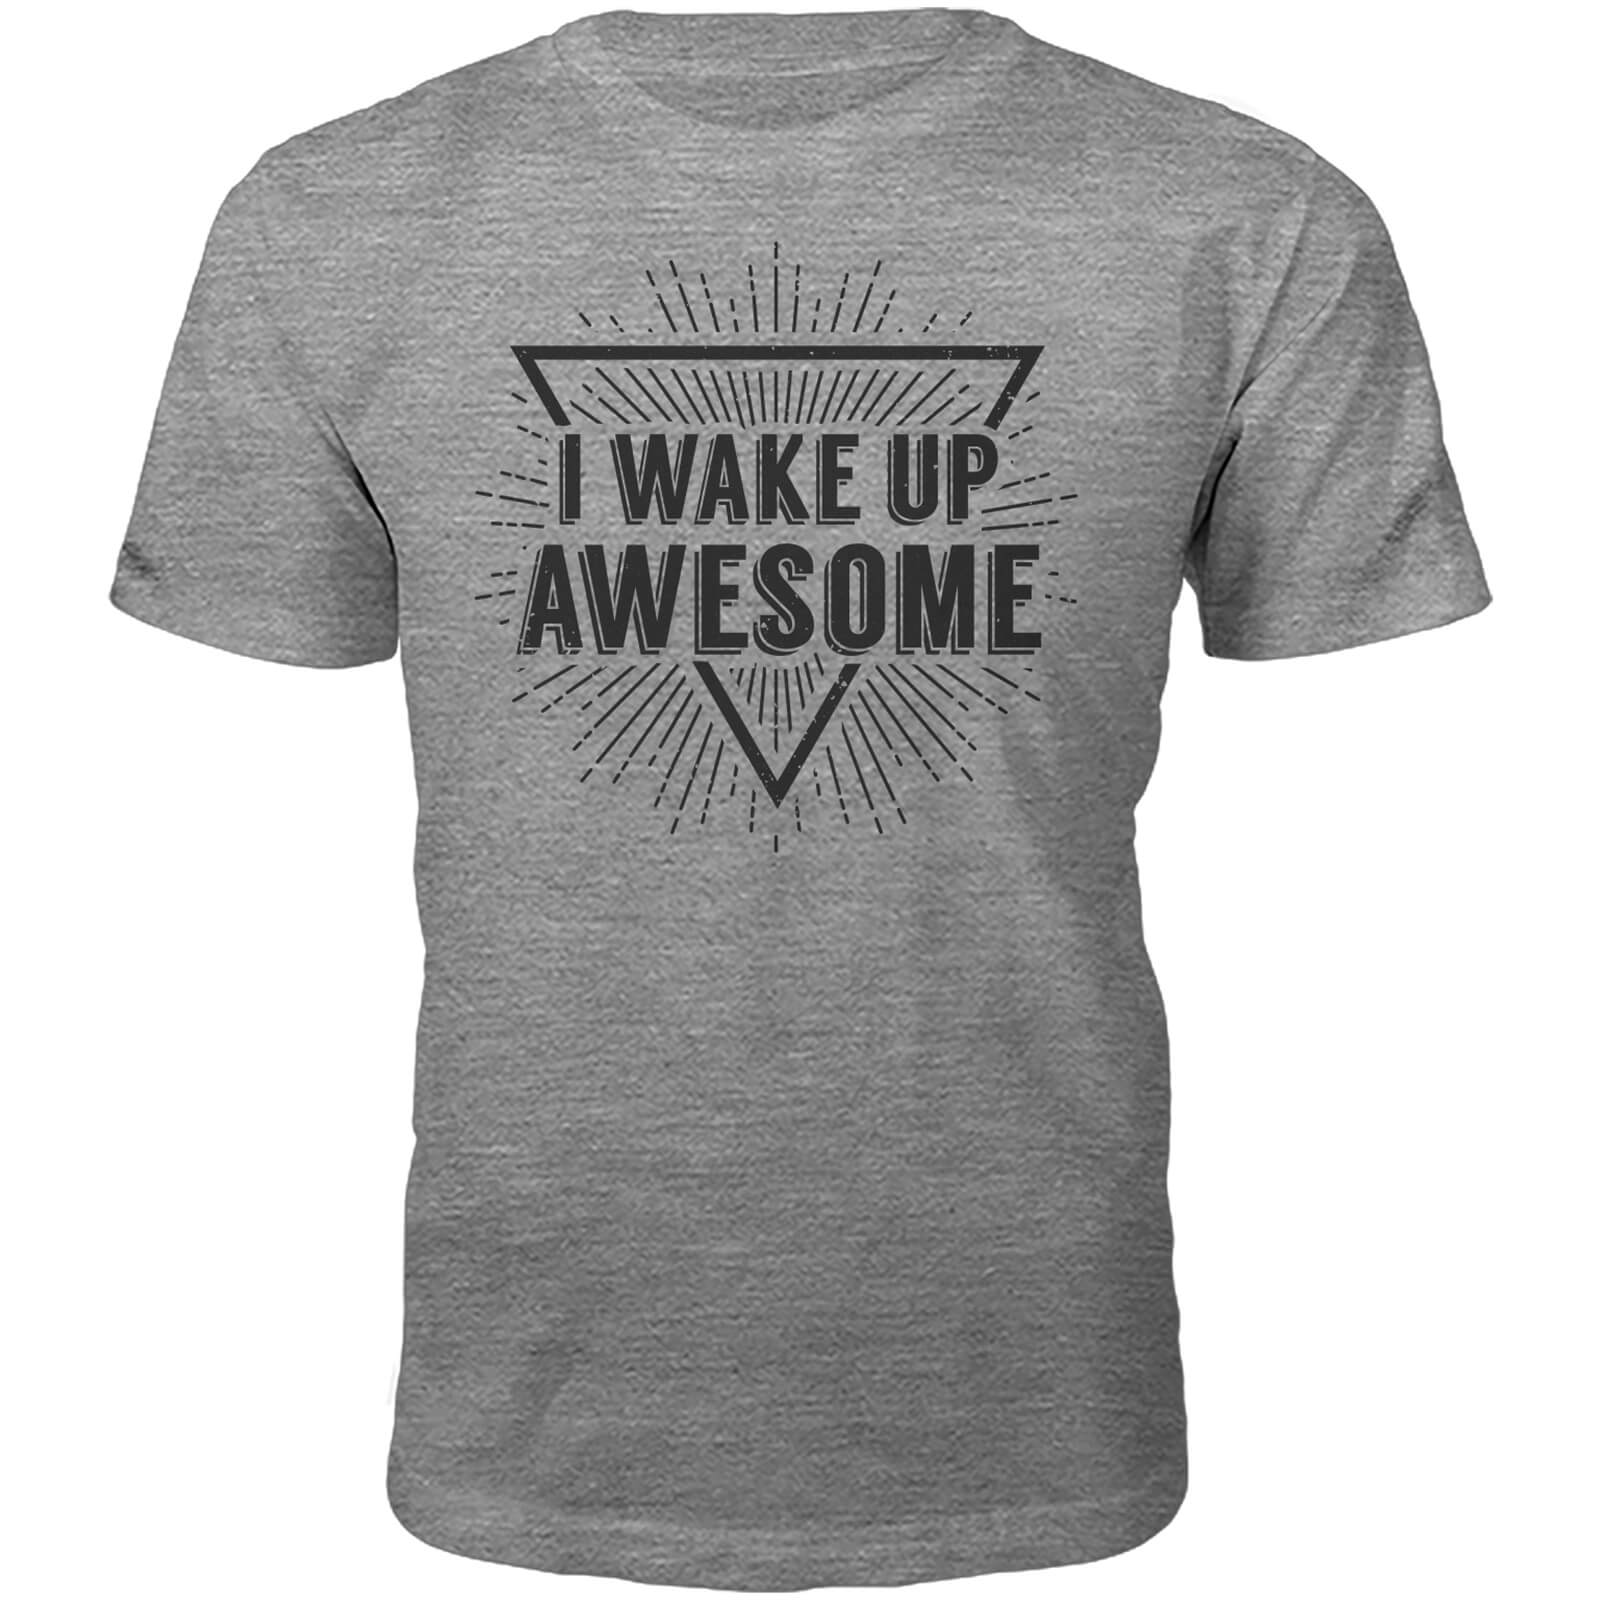 I Wake Up Awesome Slogan T-Shirt - Grey - S - Grey